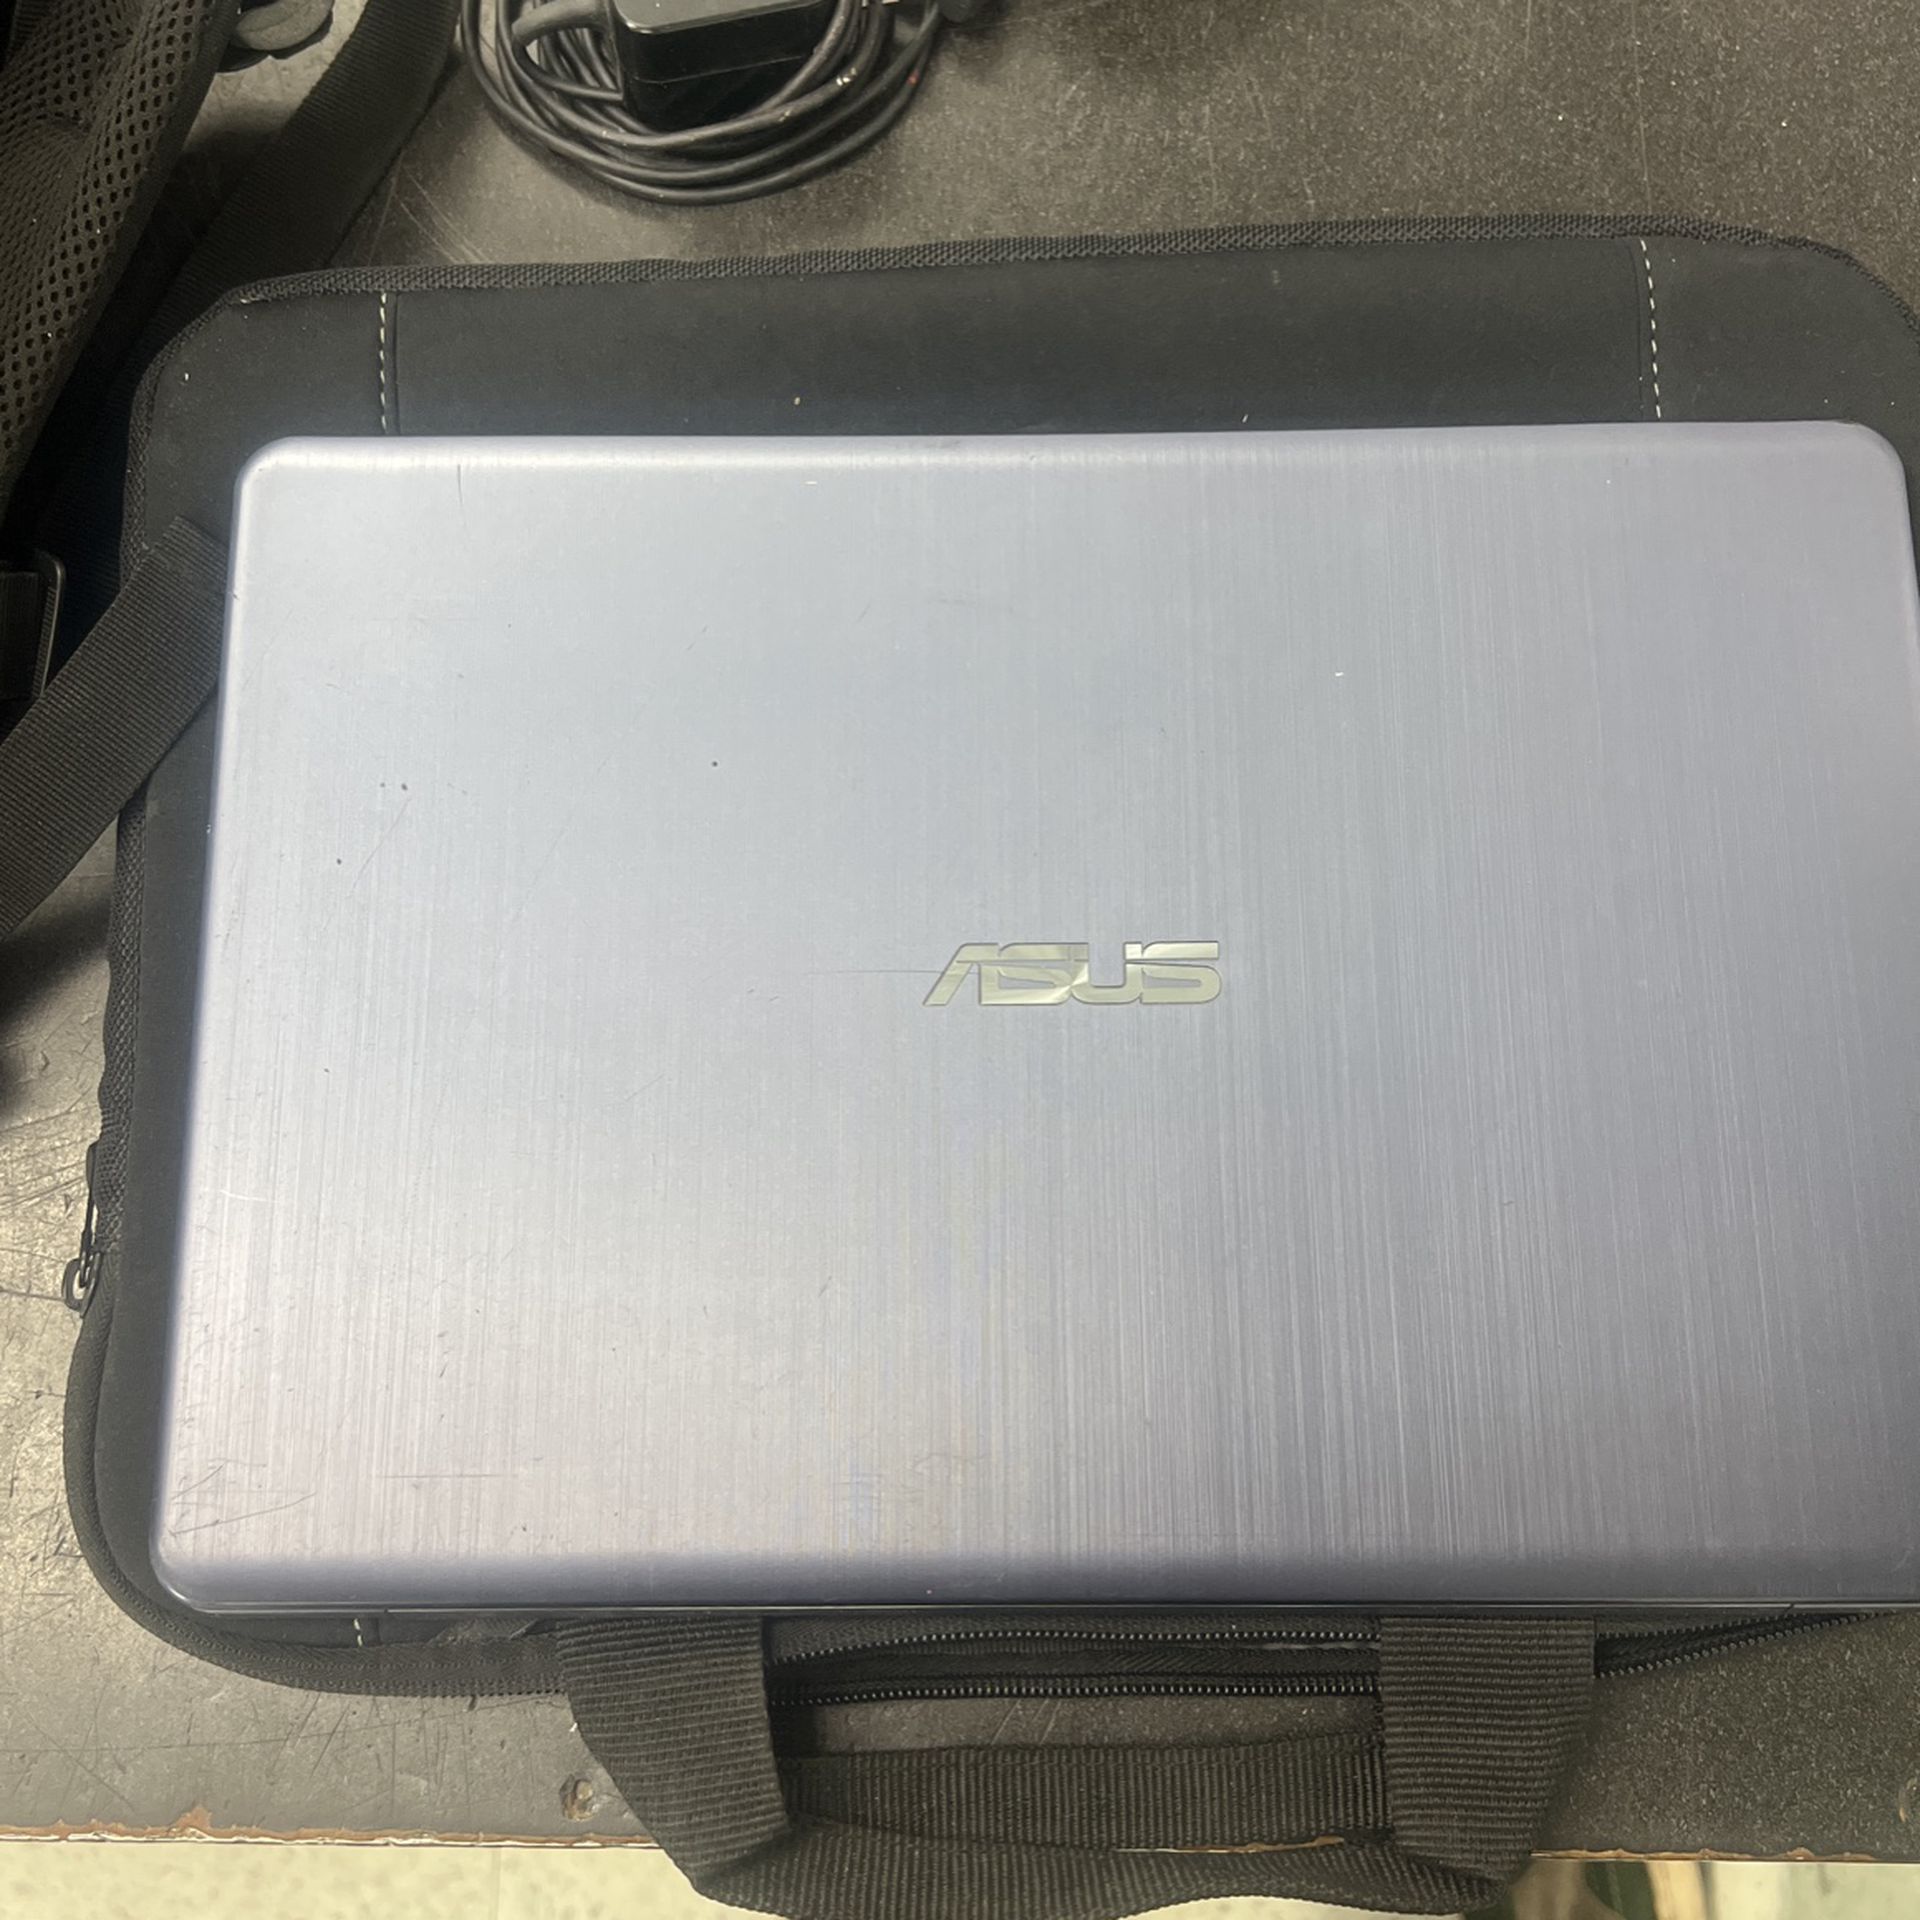 Asus Laptop Notebook PC